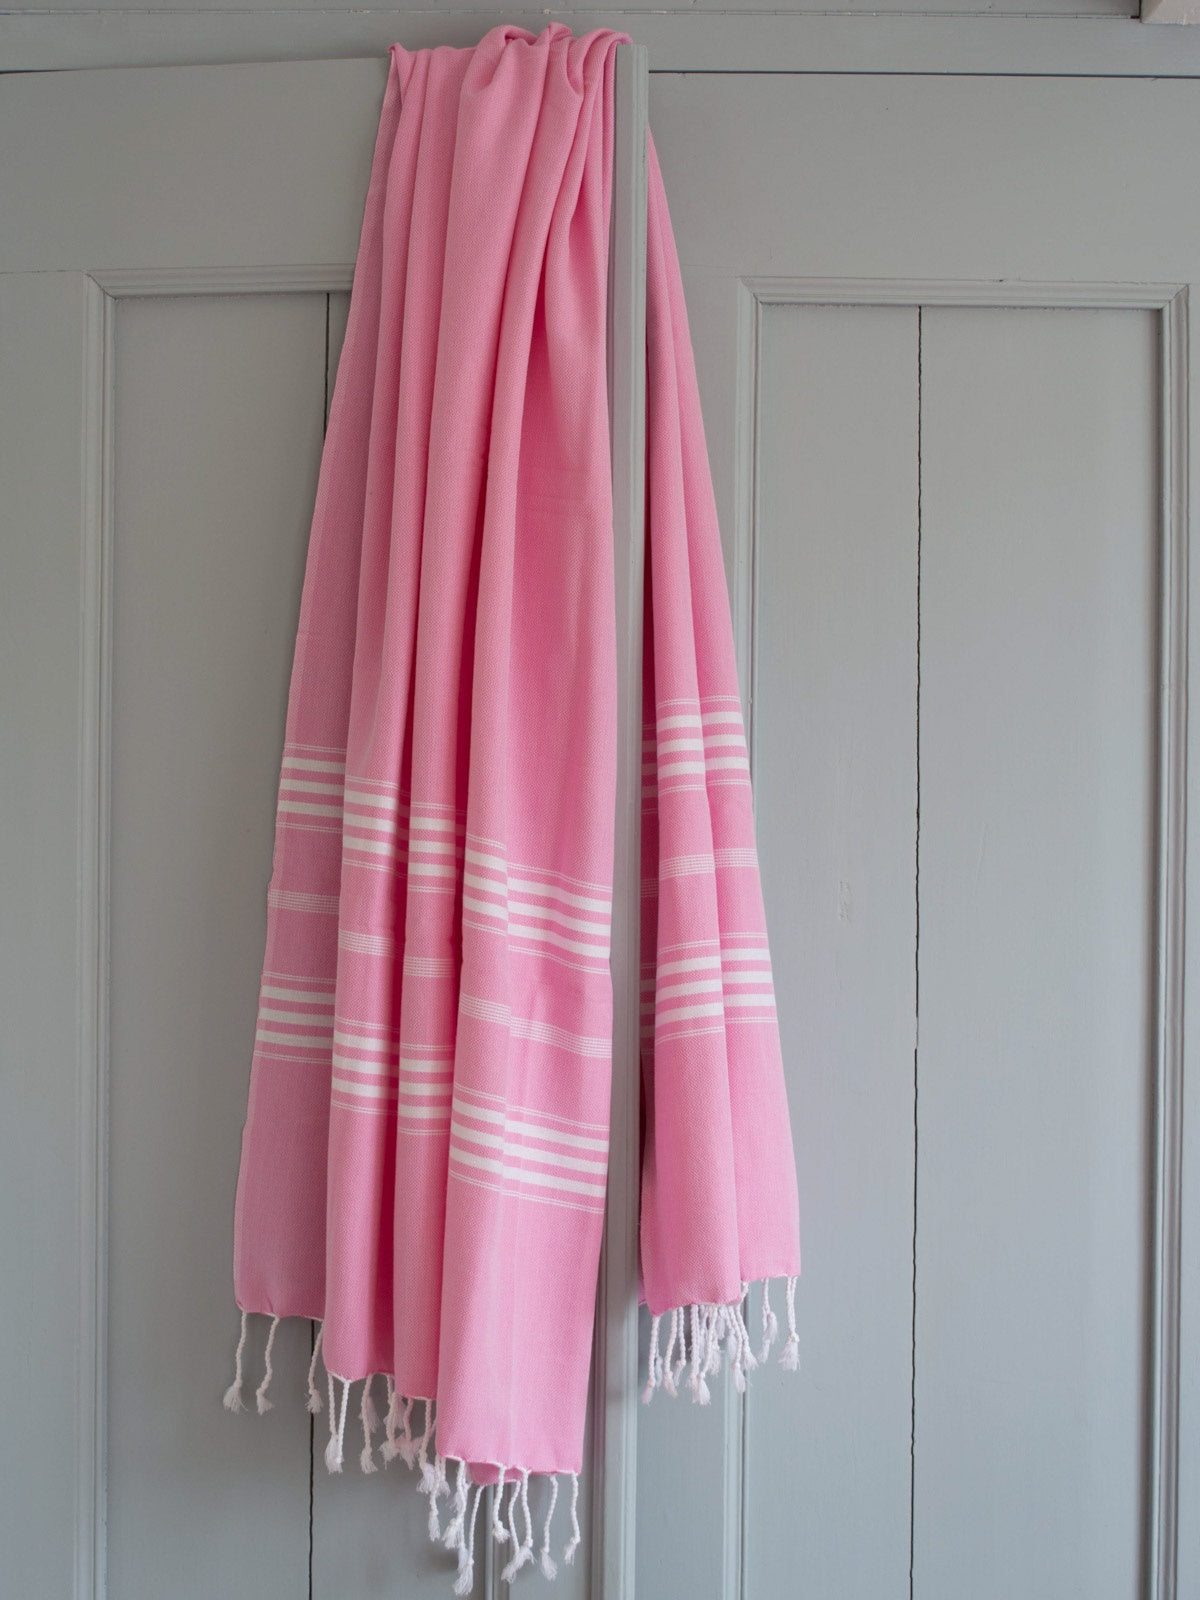 Hammam Towel 210x100cm Sorbet Pink Striped